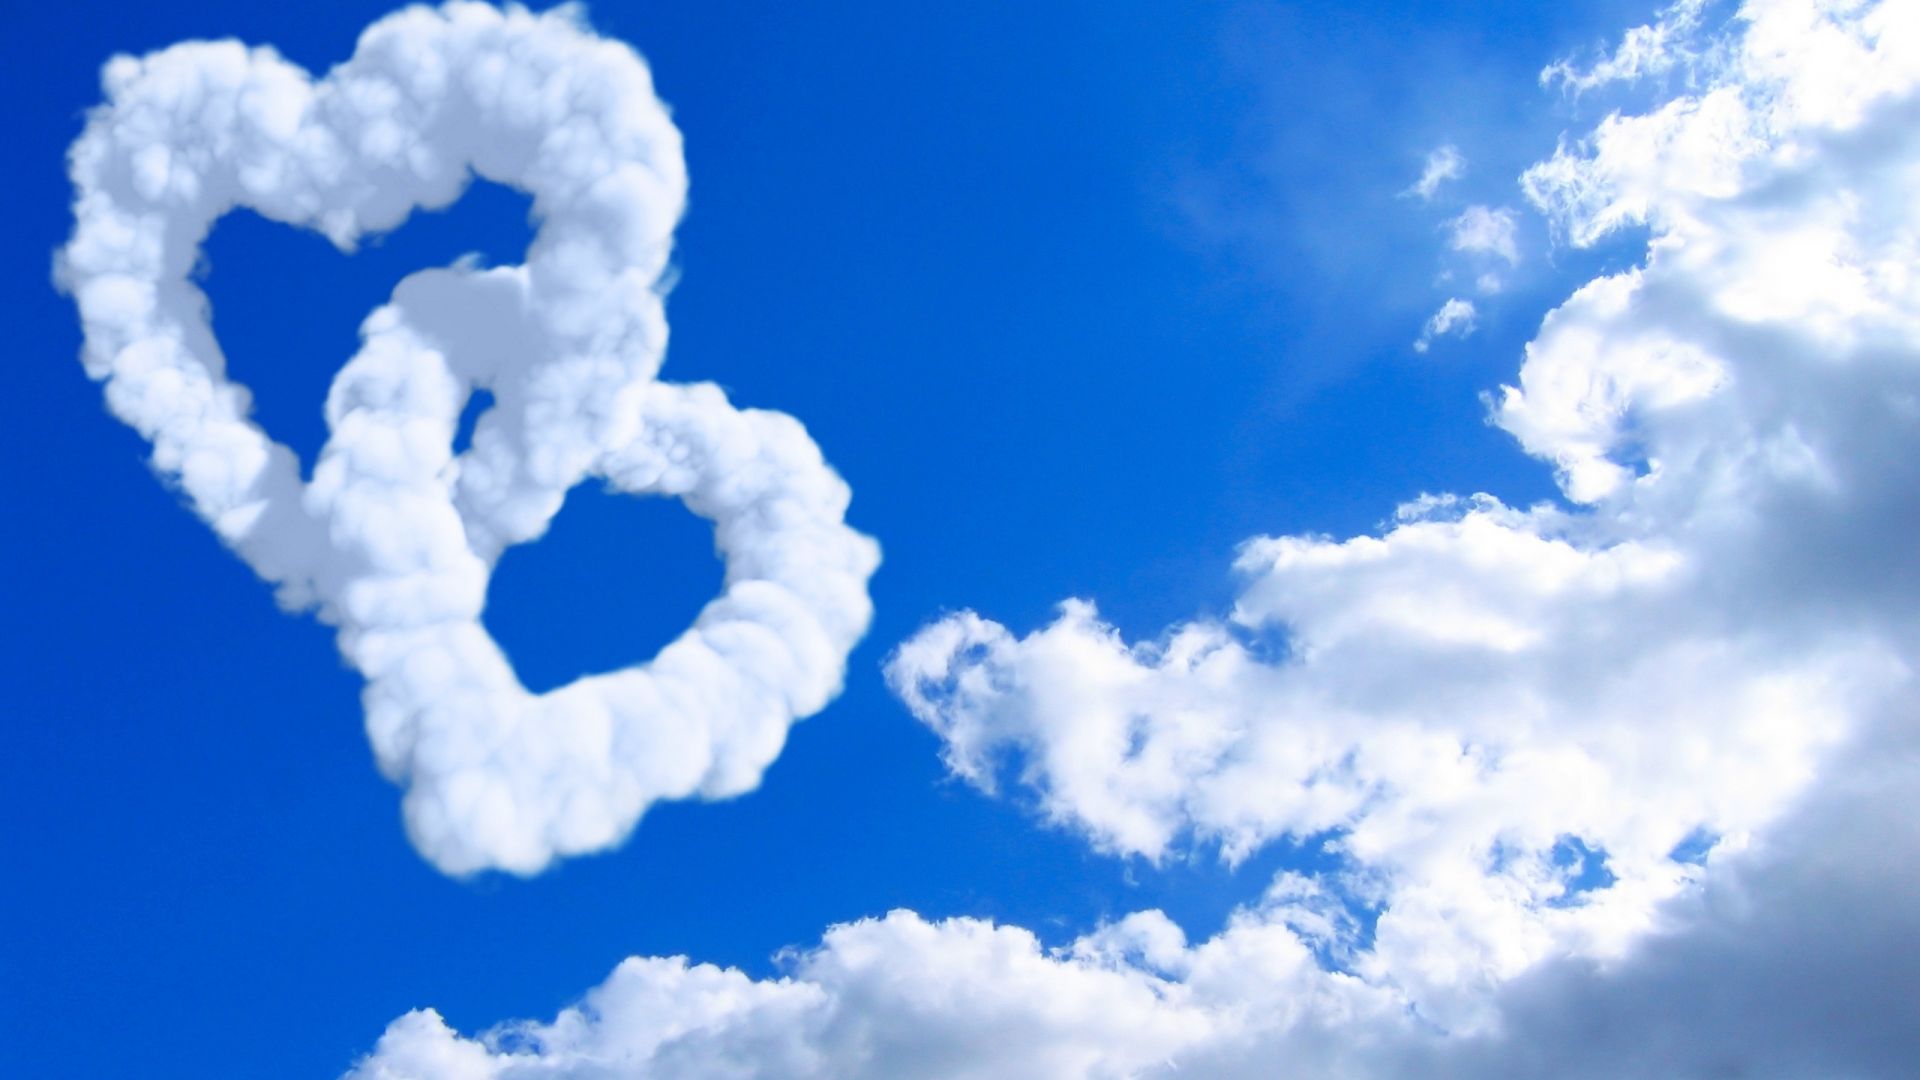 фото любовь, сердце, love image, heart, HD, clouds (horizontal)